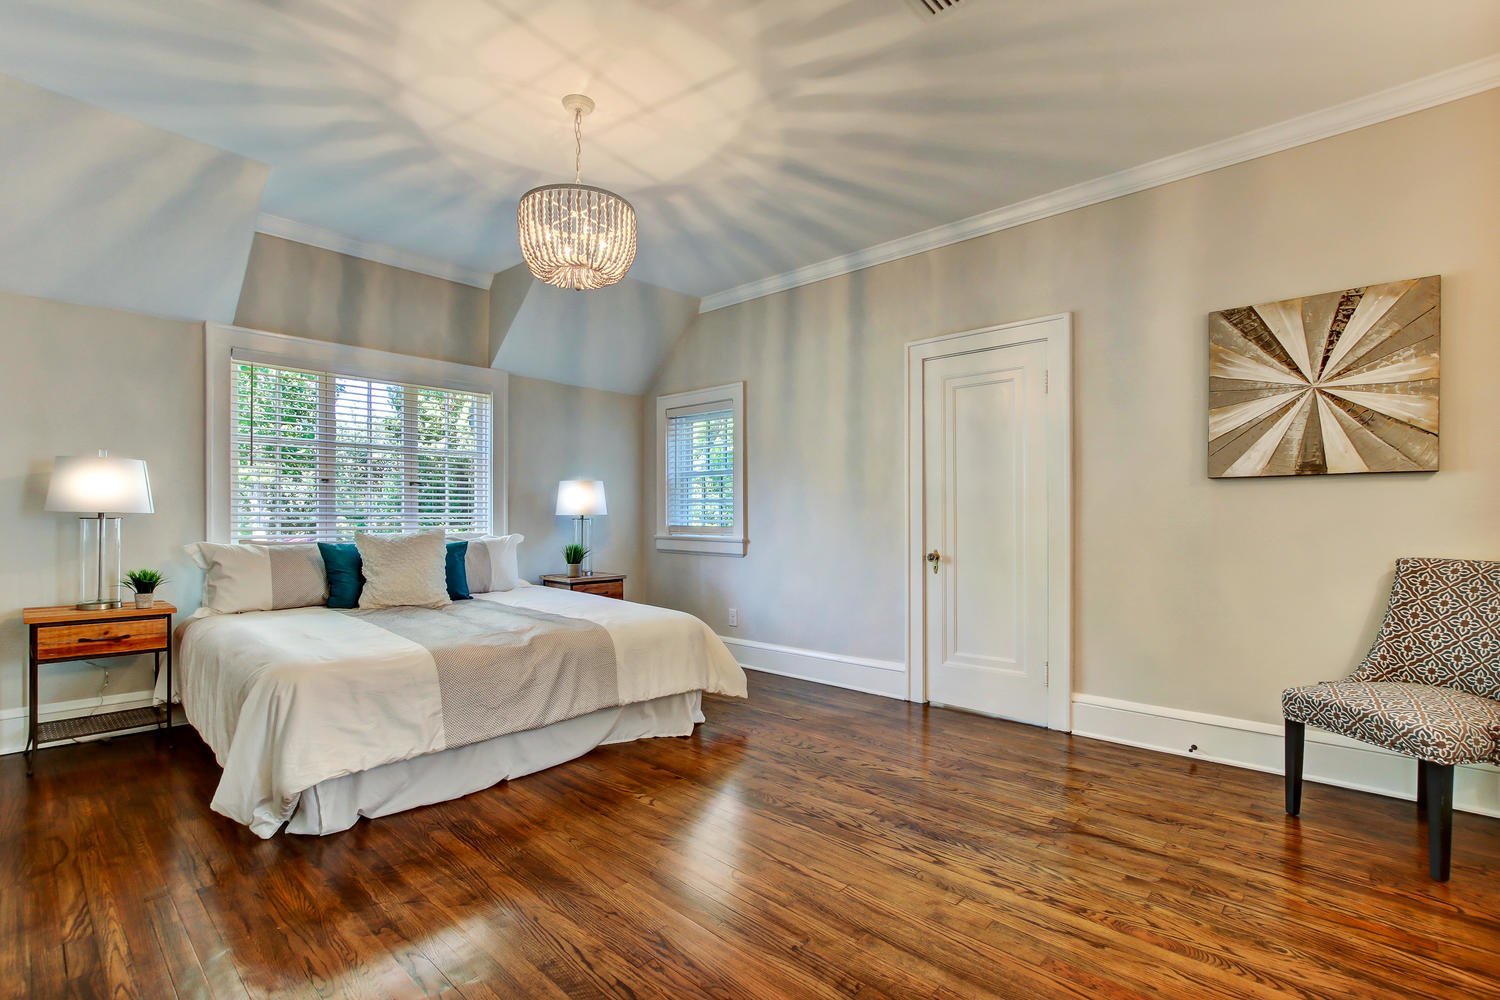 Master bedroom in Avondale home with original hardwood floors